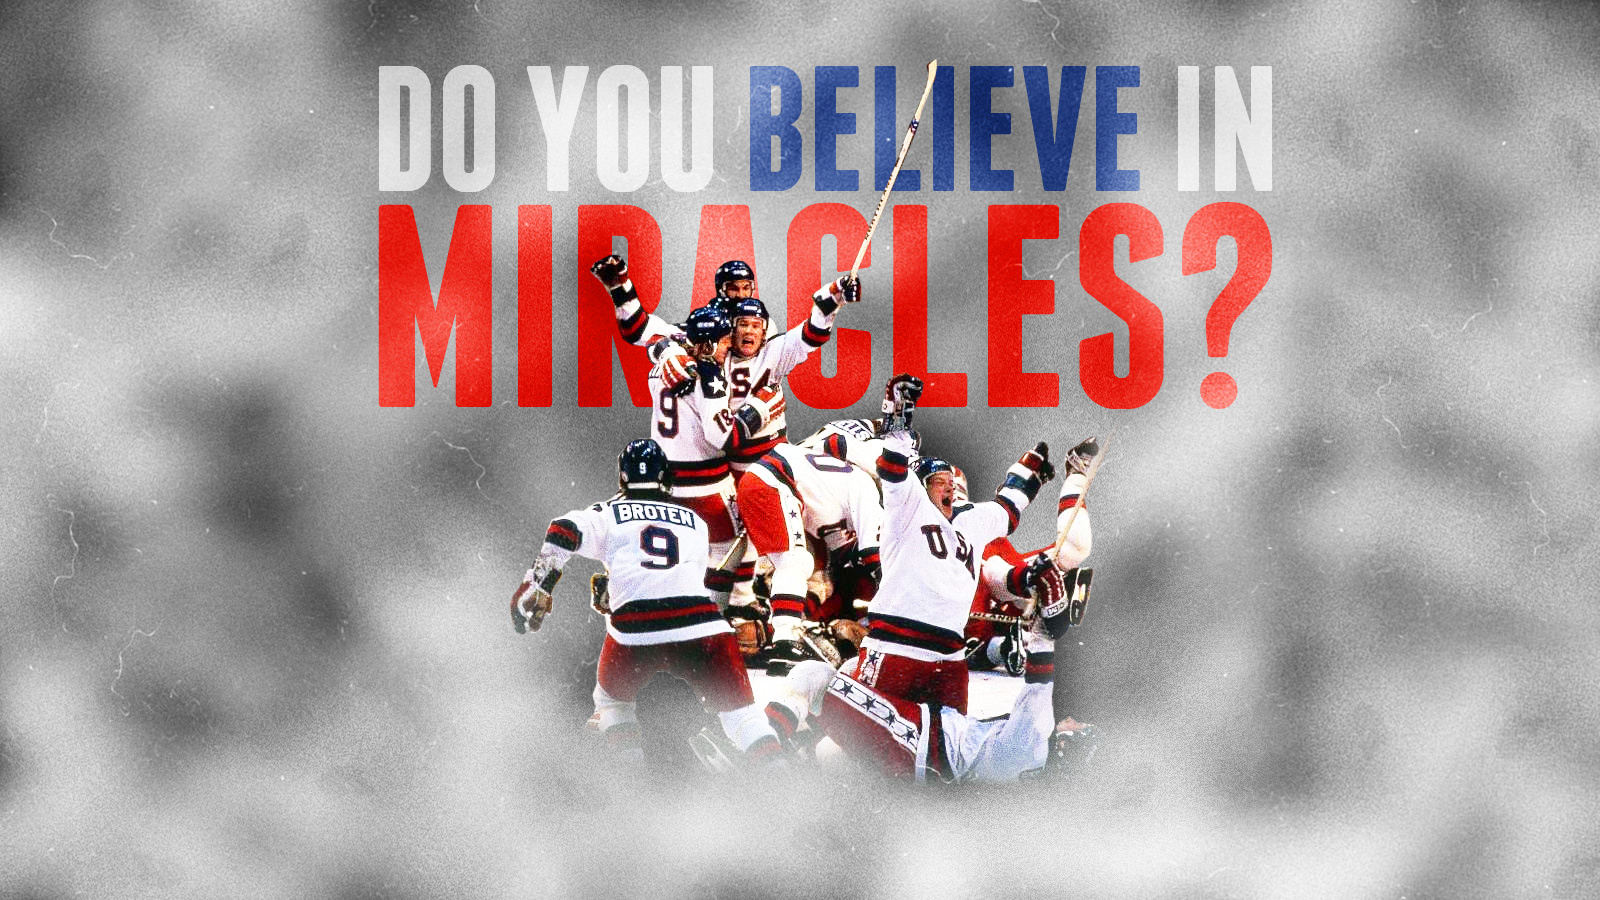 Mike Eruzione #21 1980 Miracle On Ice Team USA Hockey Movie Jersey